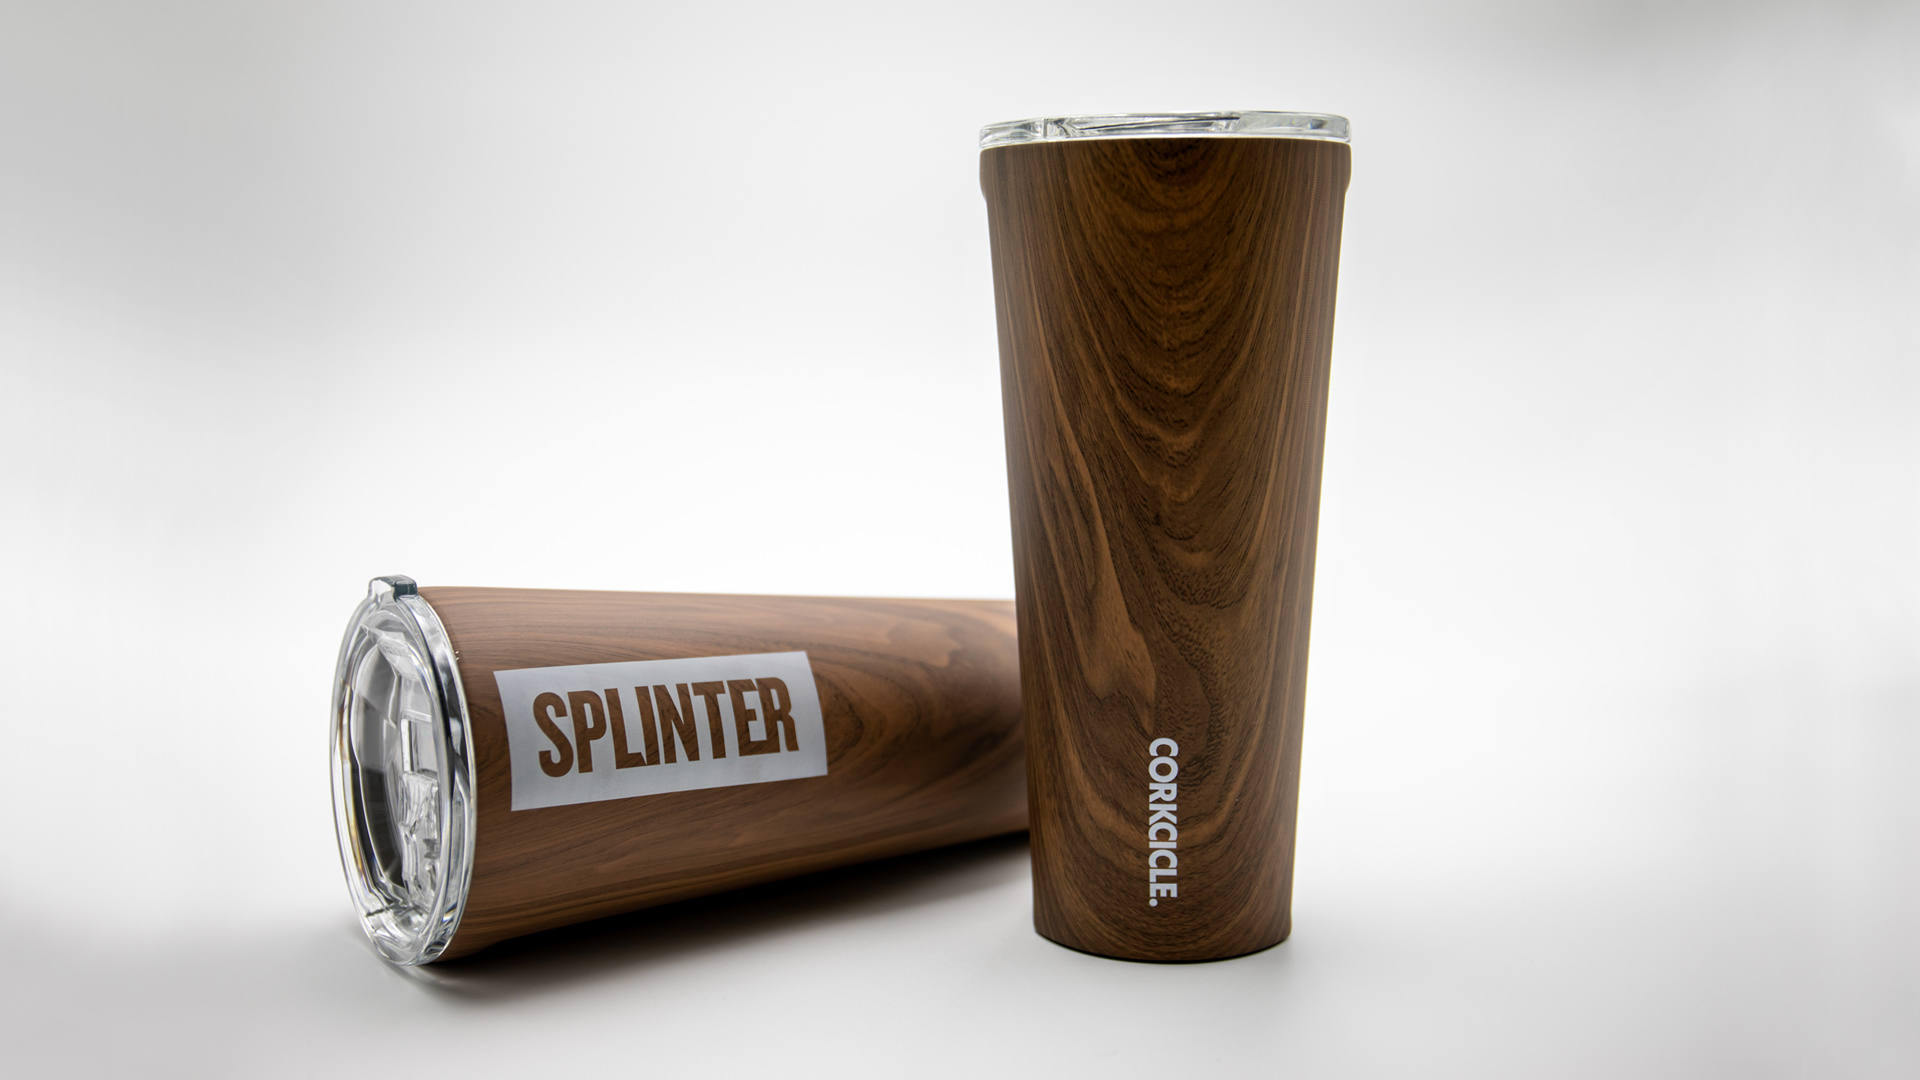 Splinter & Corkcicle. Of Course We Wood.